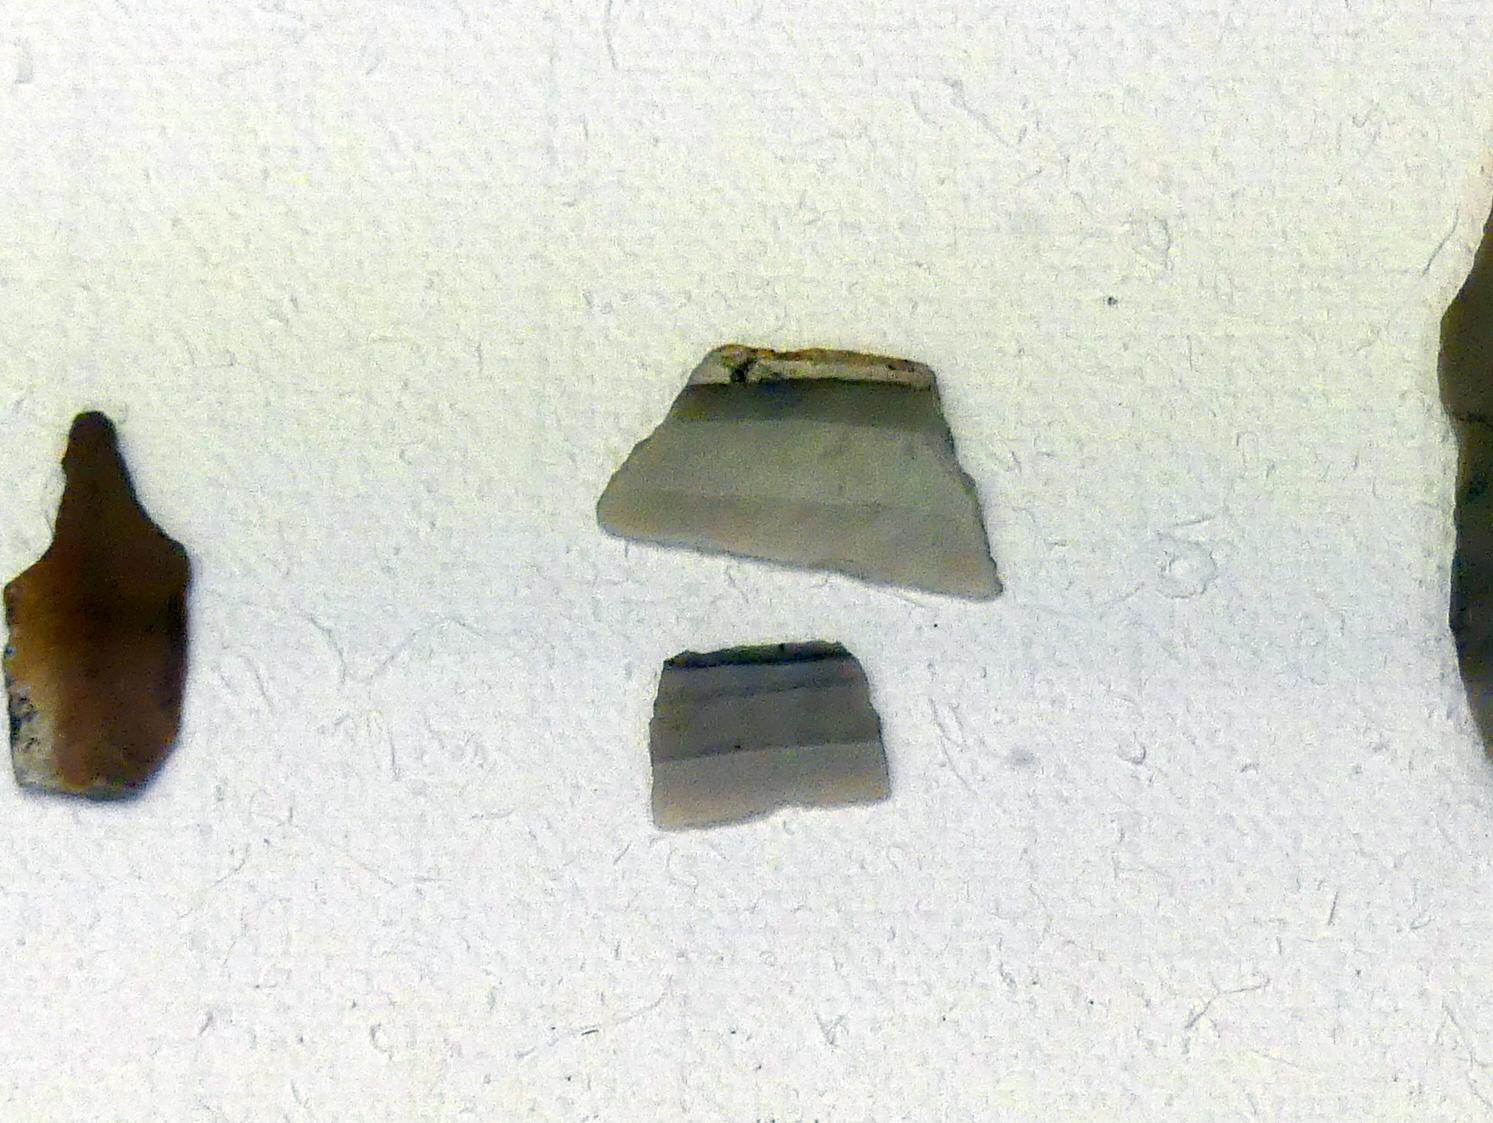 2 Querschneider, Frühneolithikum (Altneolithikum), 5500 - 4900 v. Chr., Mittelneolithikum, 5500 - 4400 v. Chr.